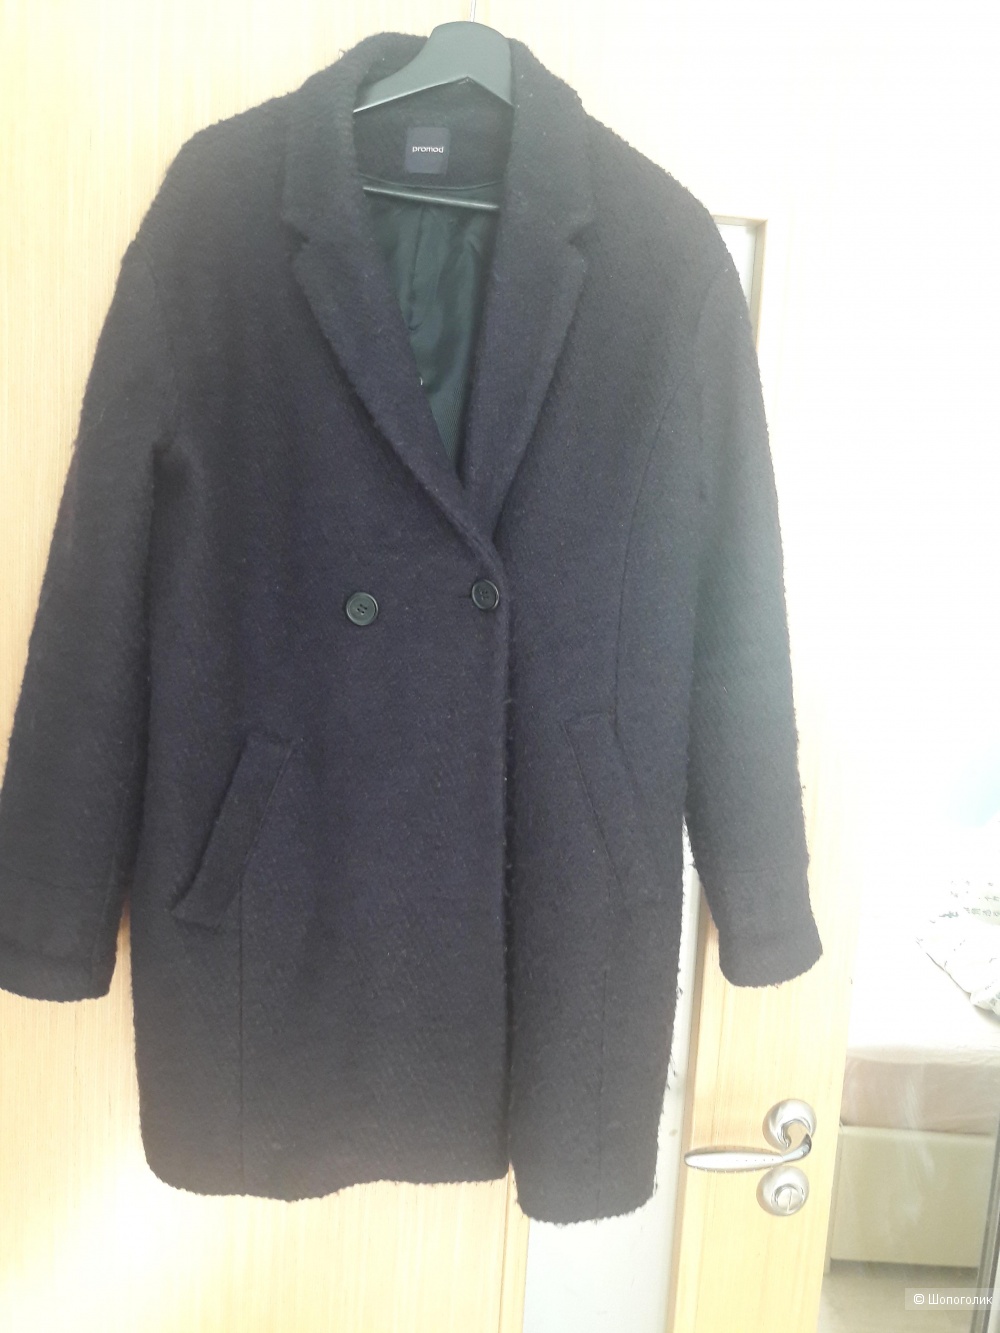 Пальто с шерстью Promod 46-48 размера